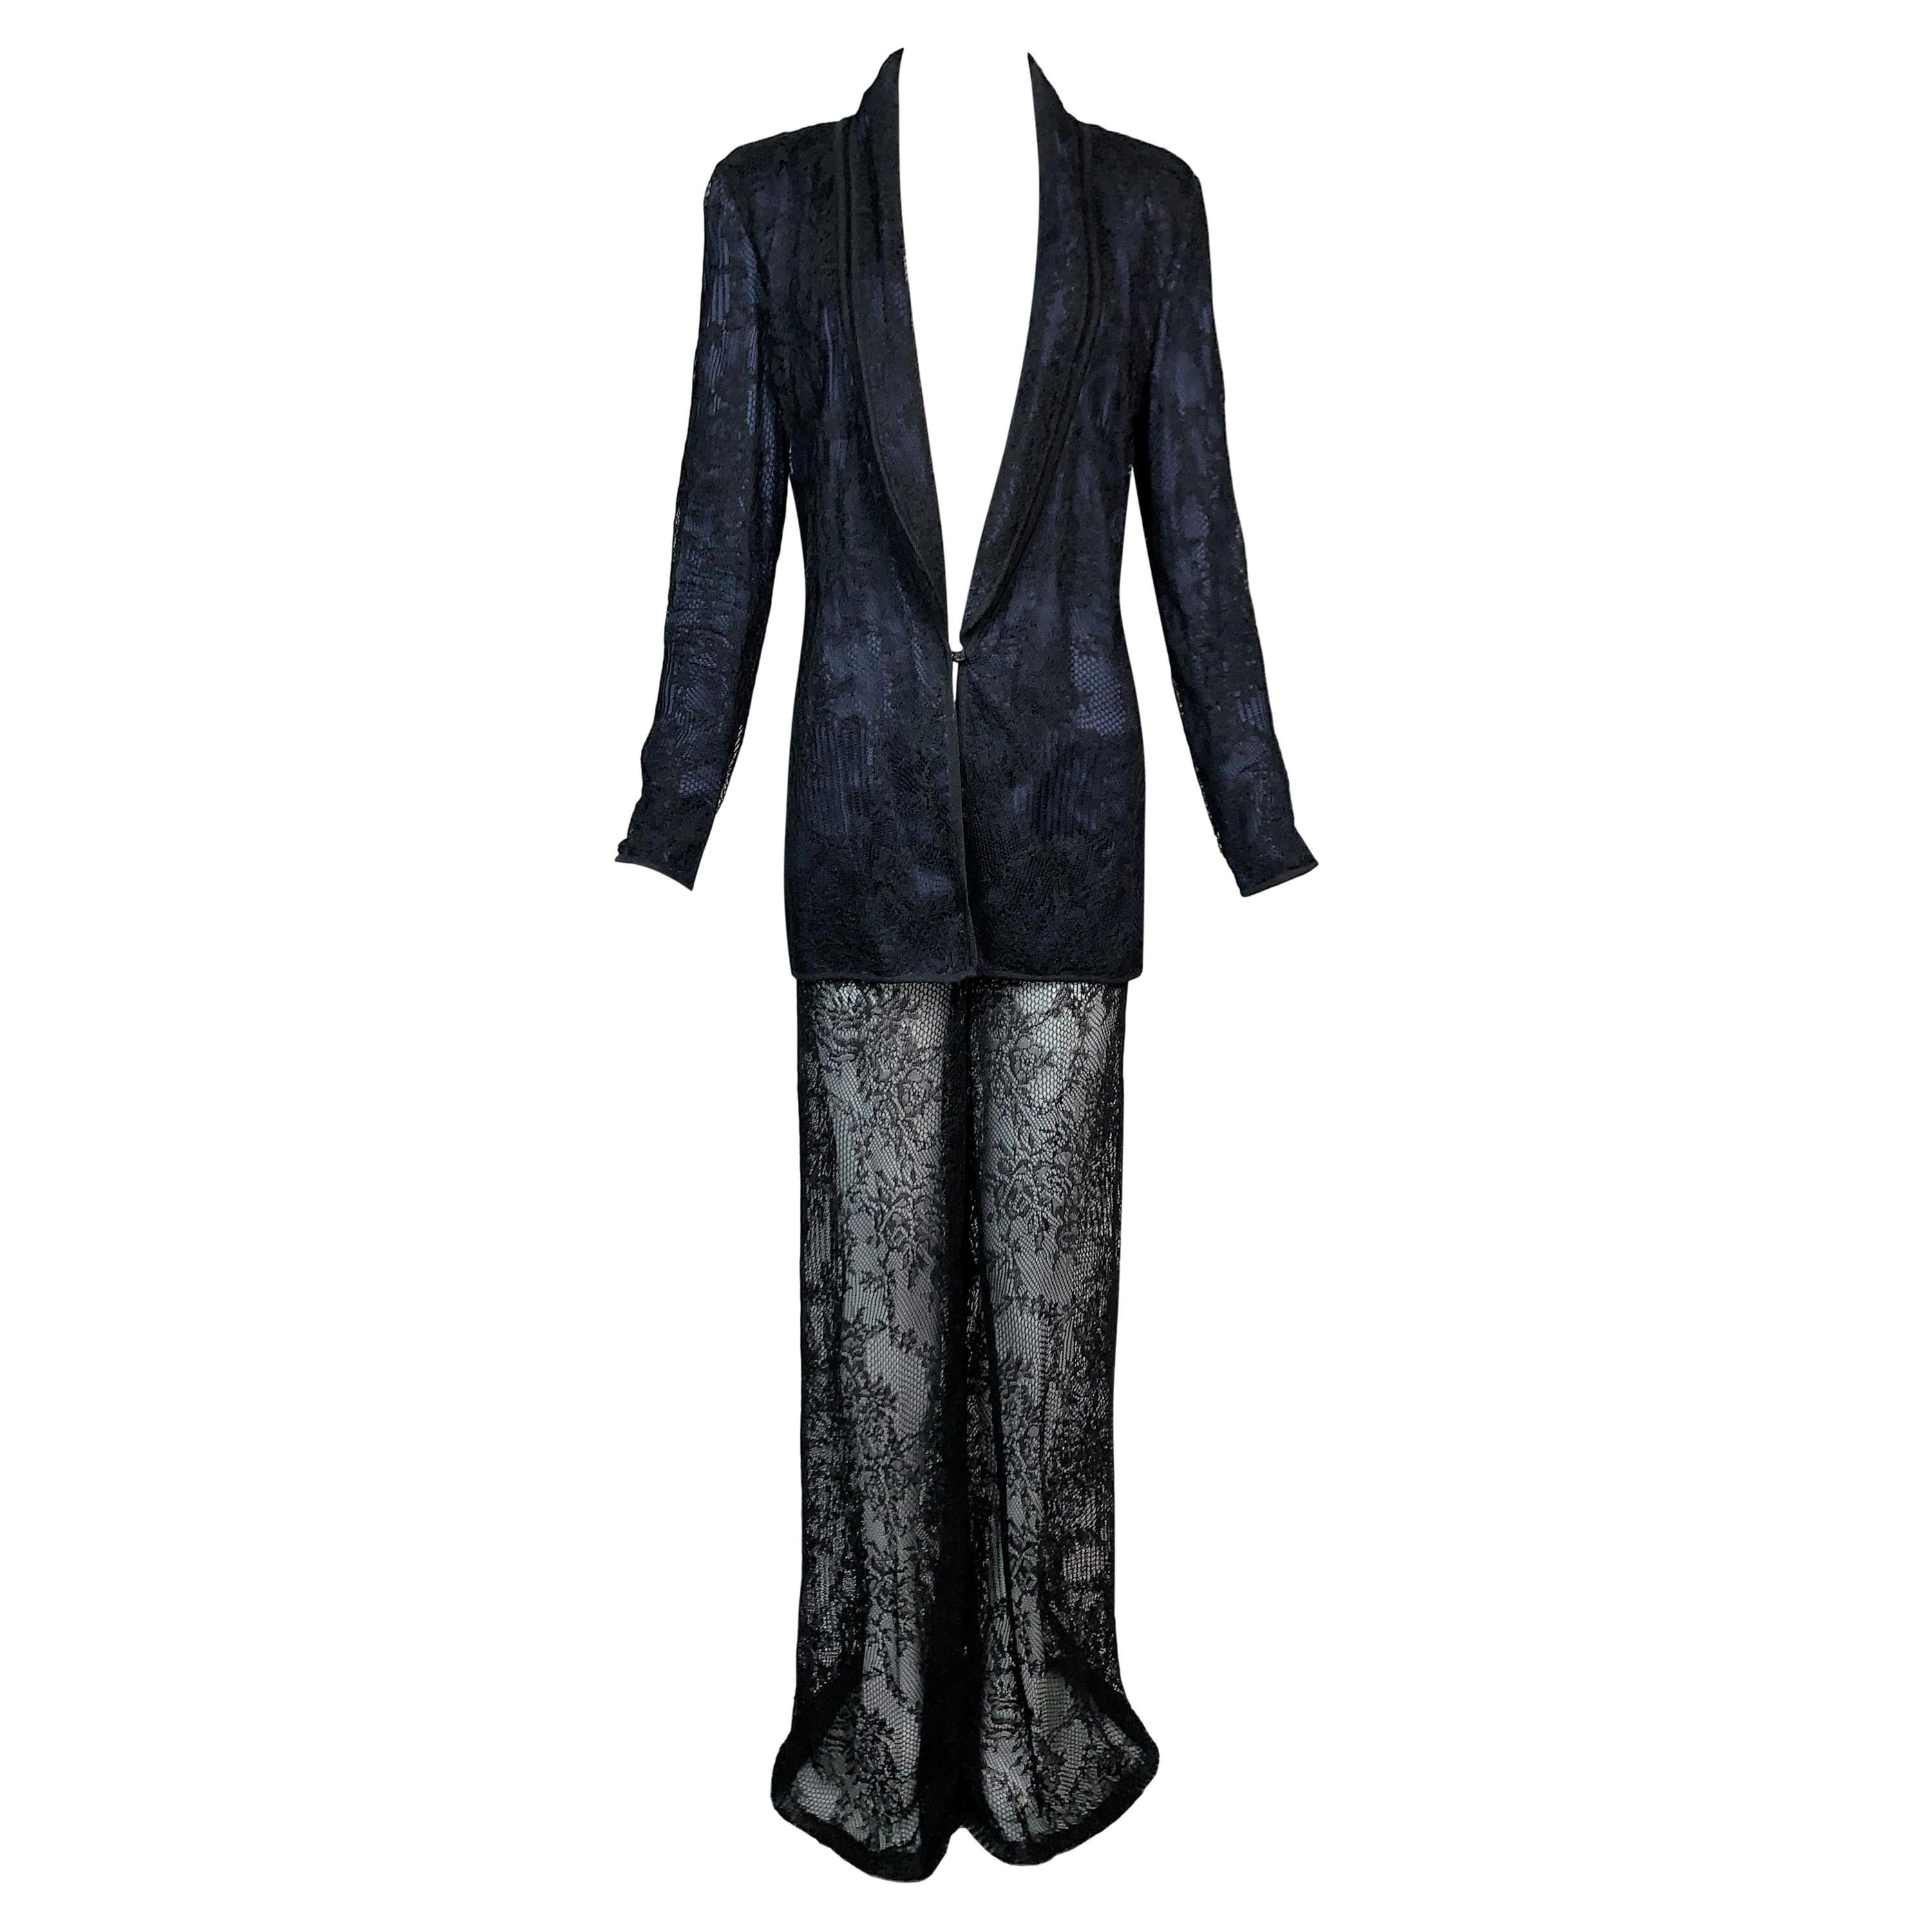 S/S 1998 Christian Dior John Galliano Sheer Black Lace Wide Leg Pant Suit